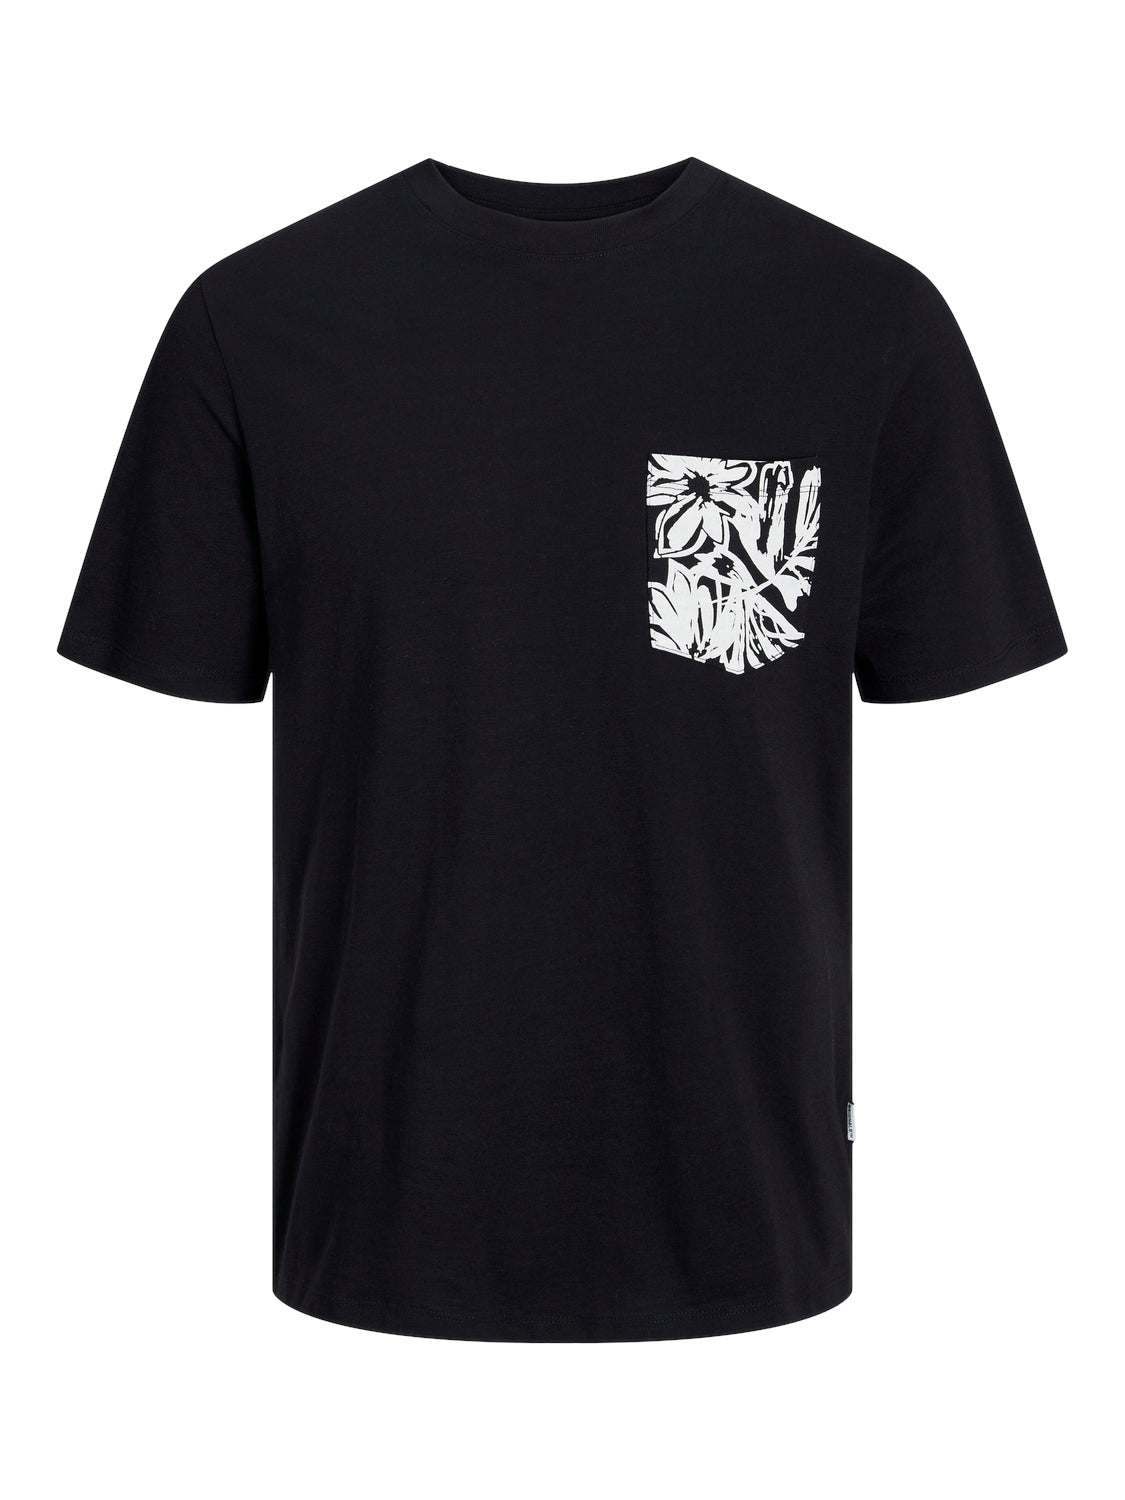 Lafayette Pocket SS Crew Neck T-Shirt - Black